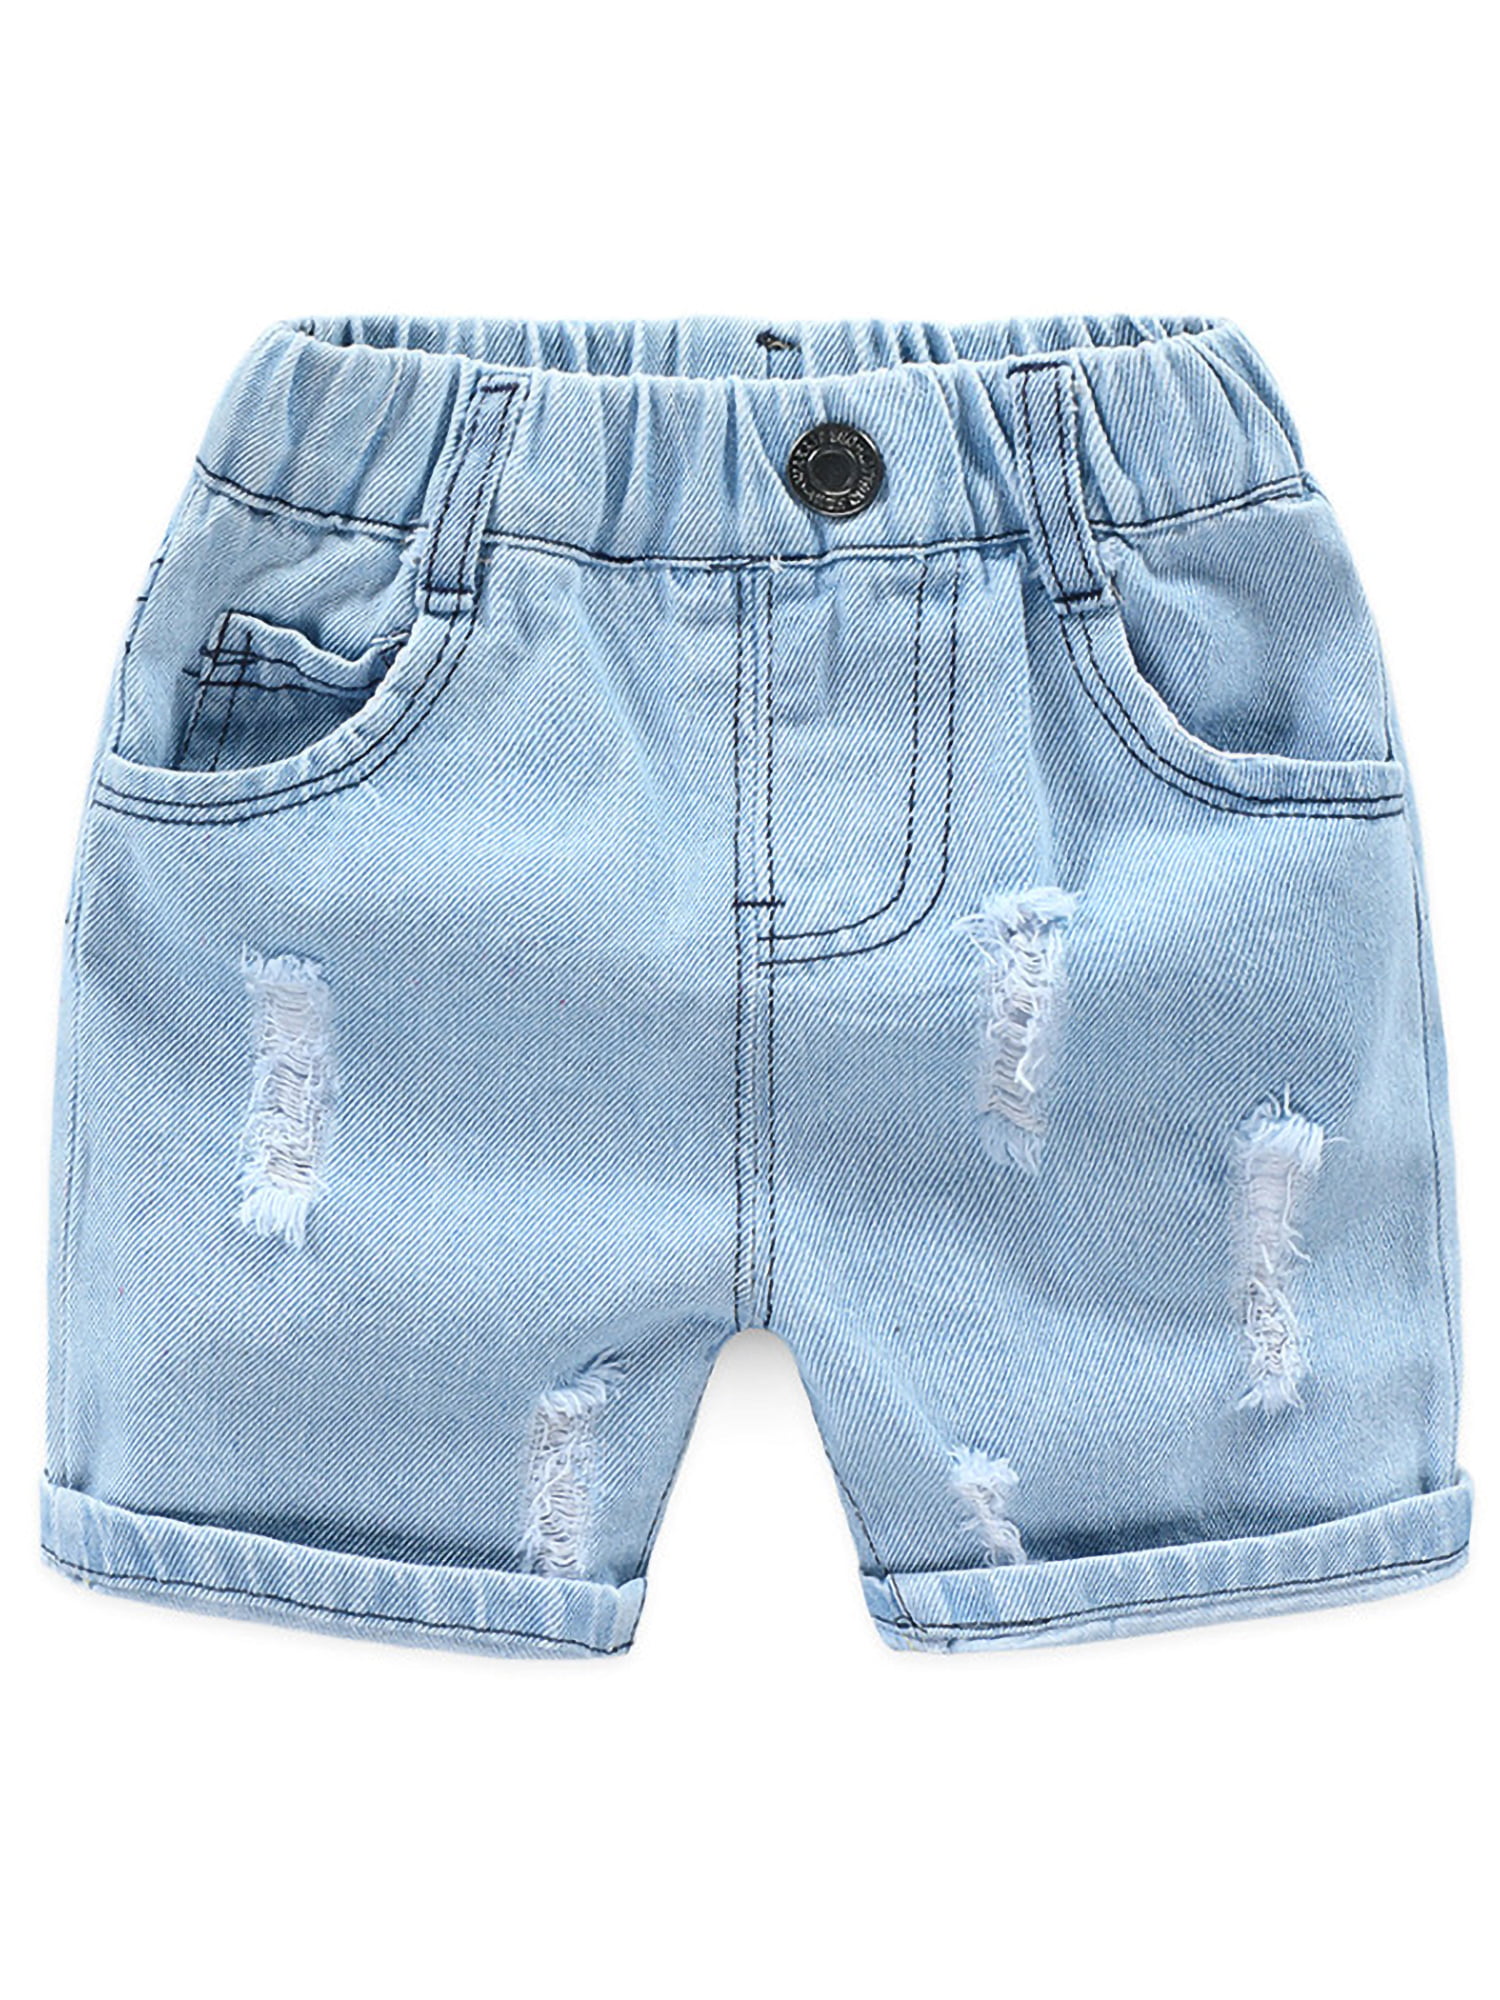 boys ripped denim shorts